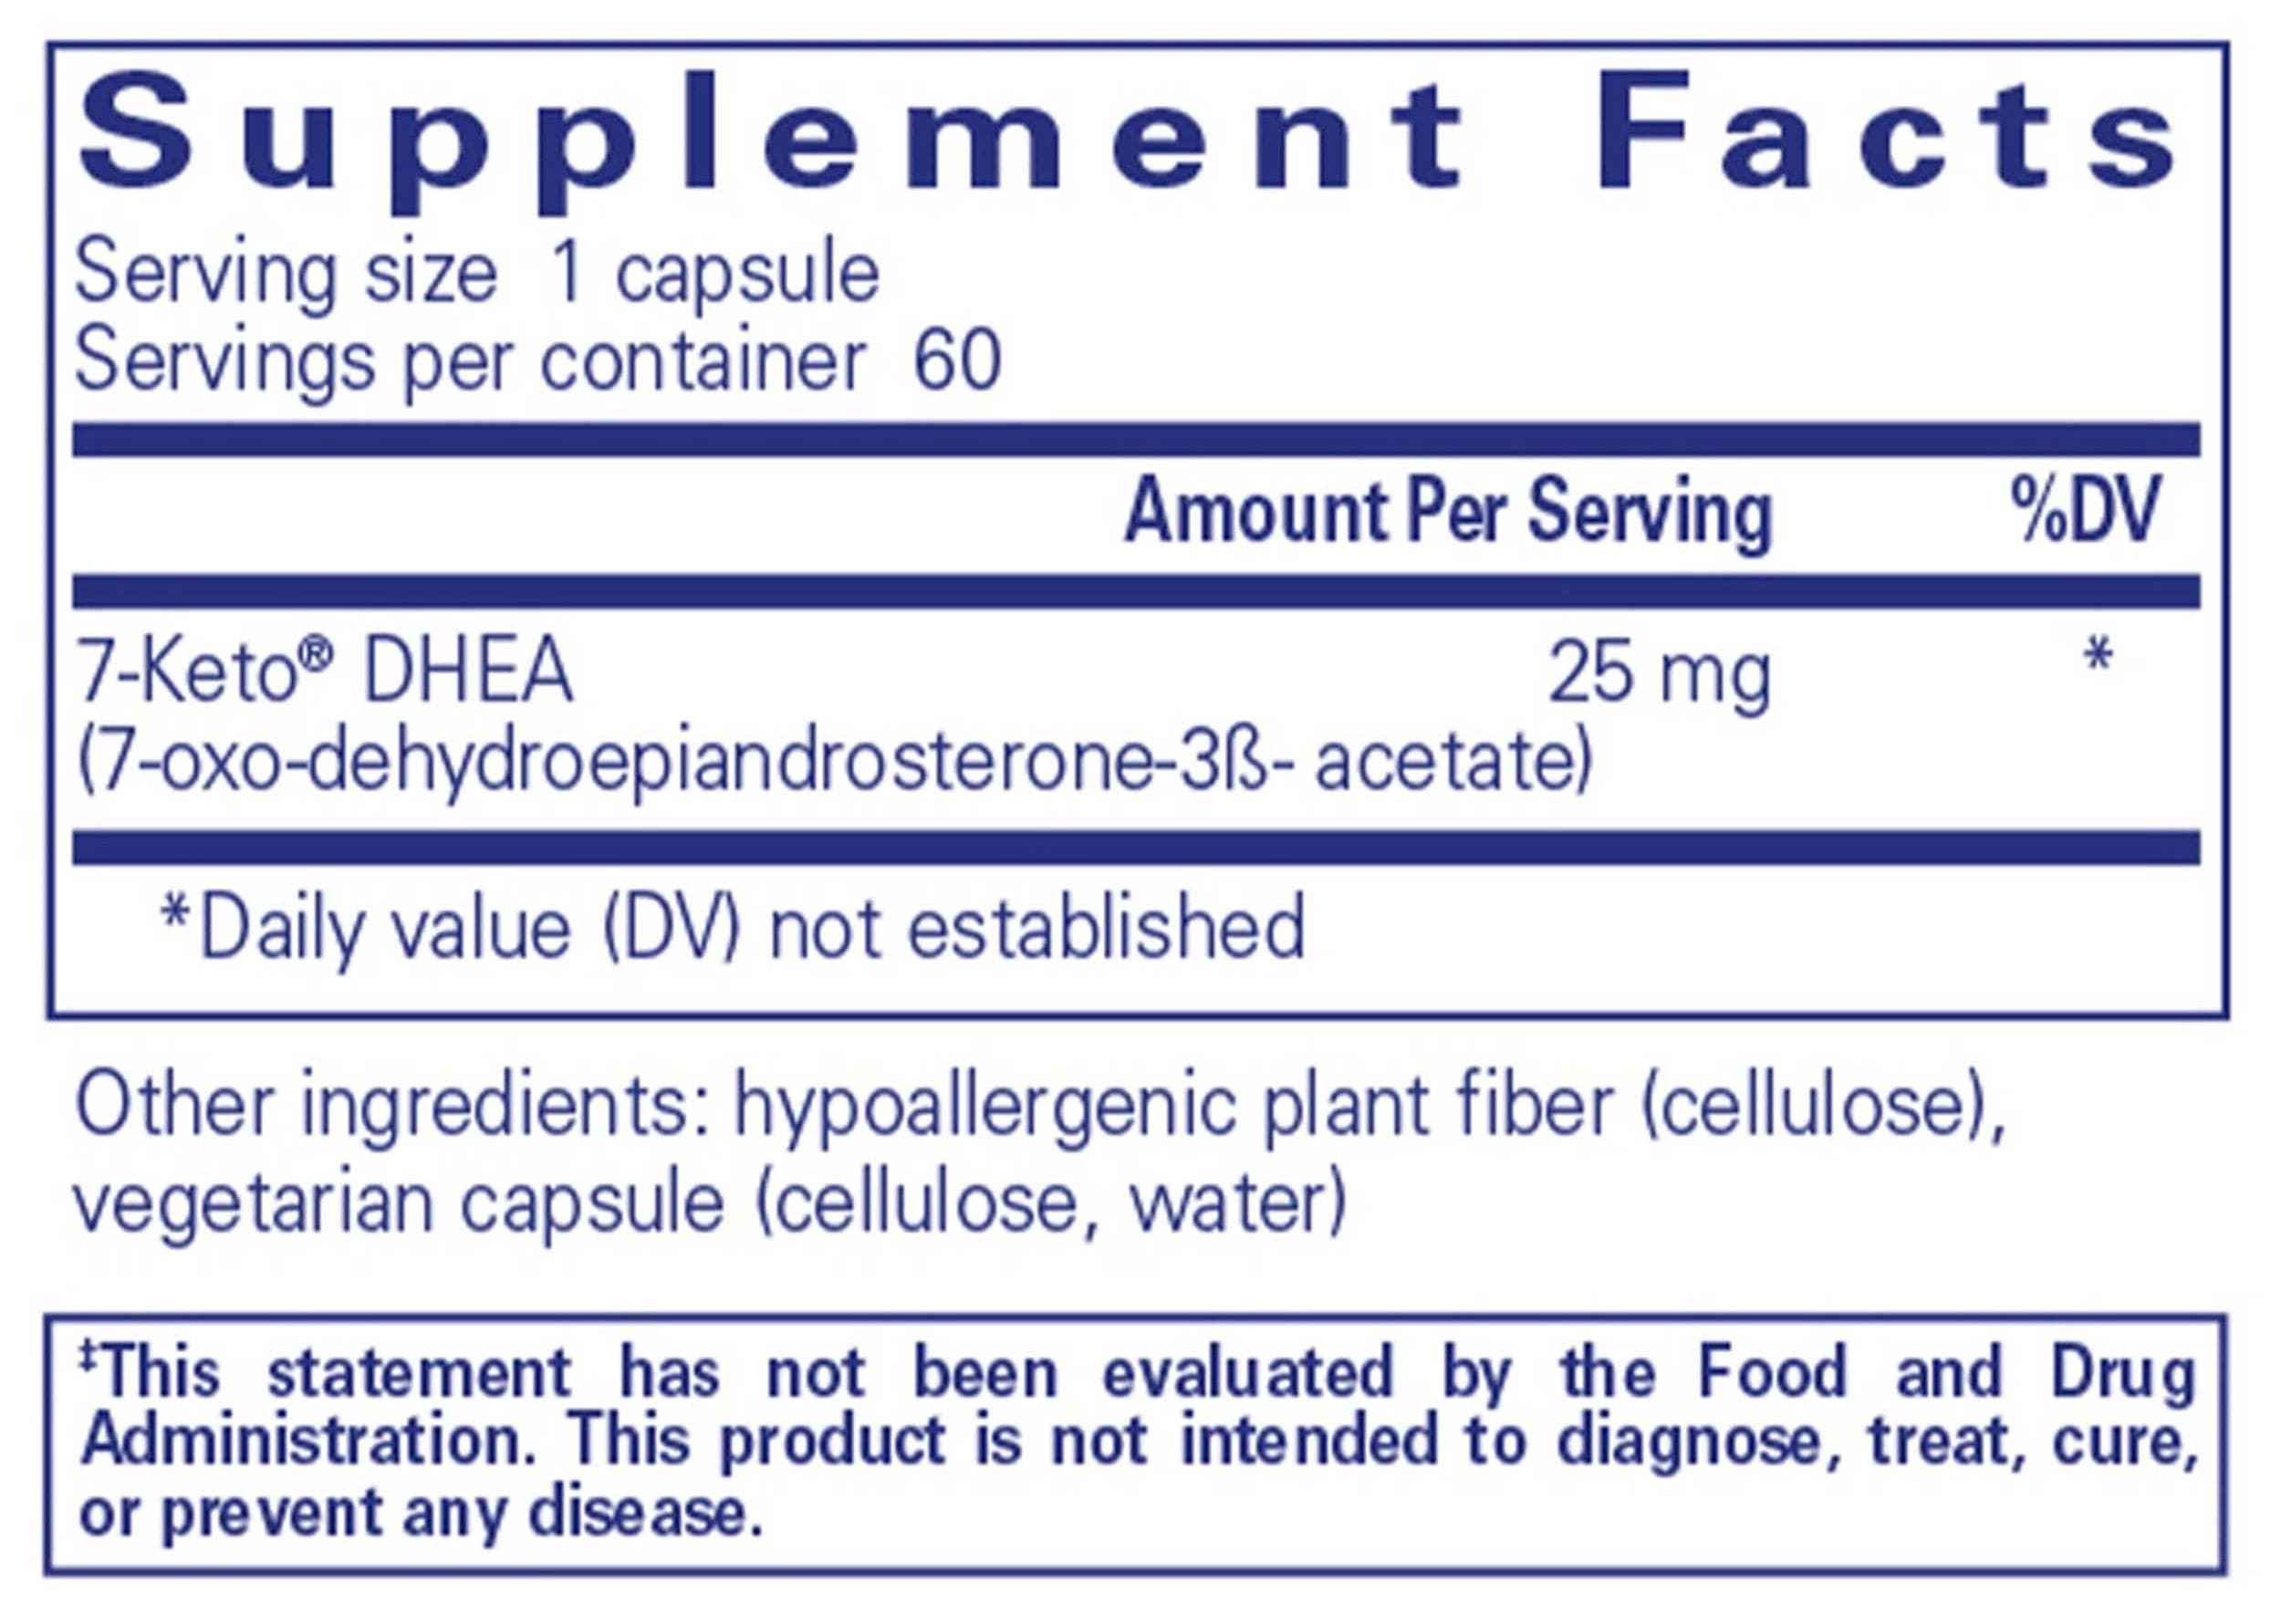 Pure Encapsulations 7-Keto DHEA 25mg Ingredients 